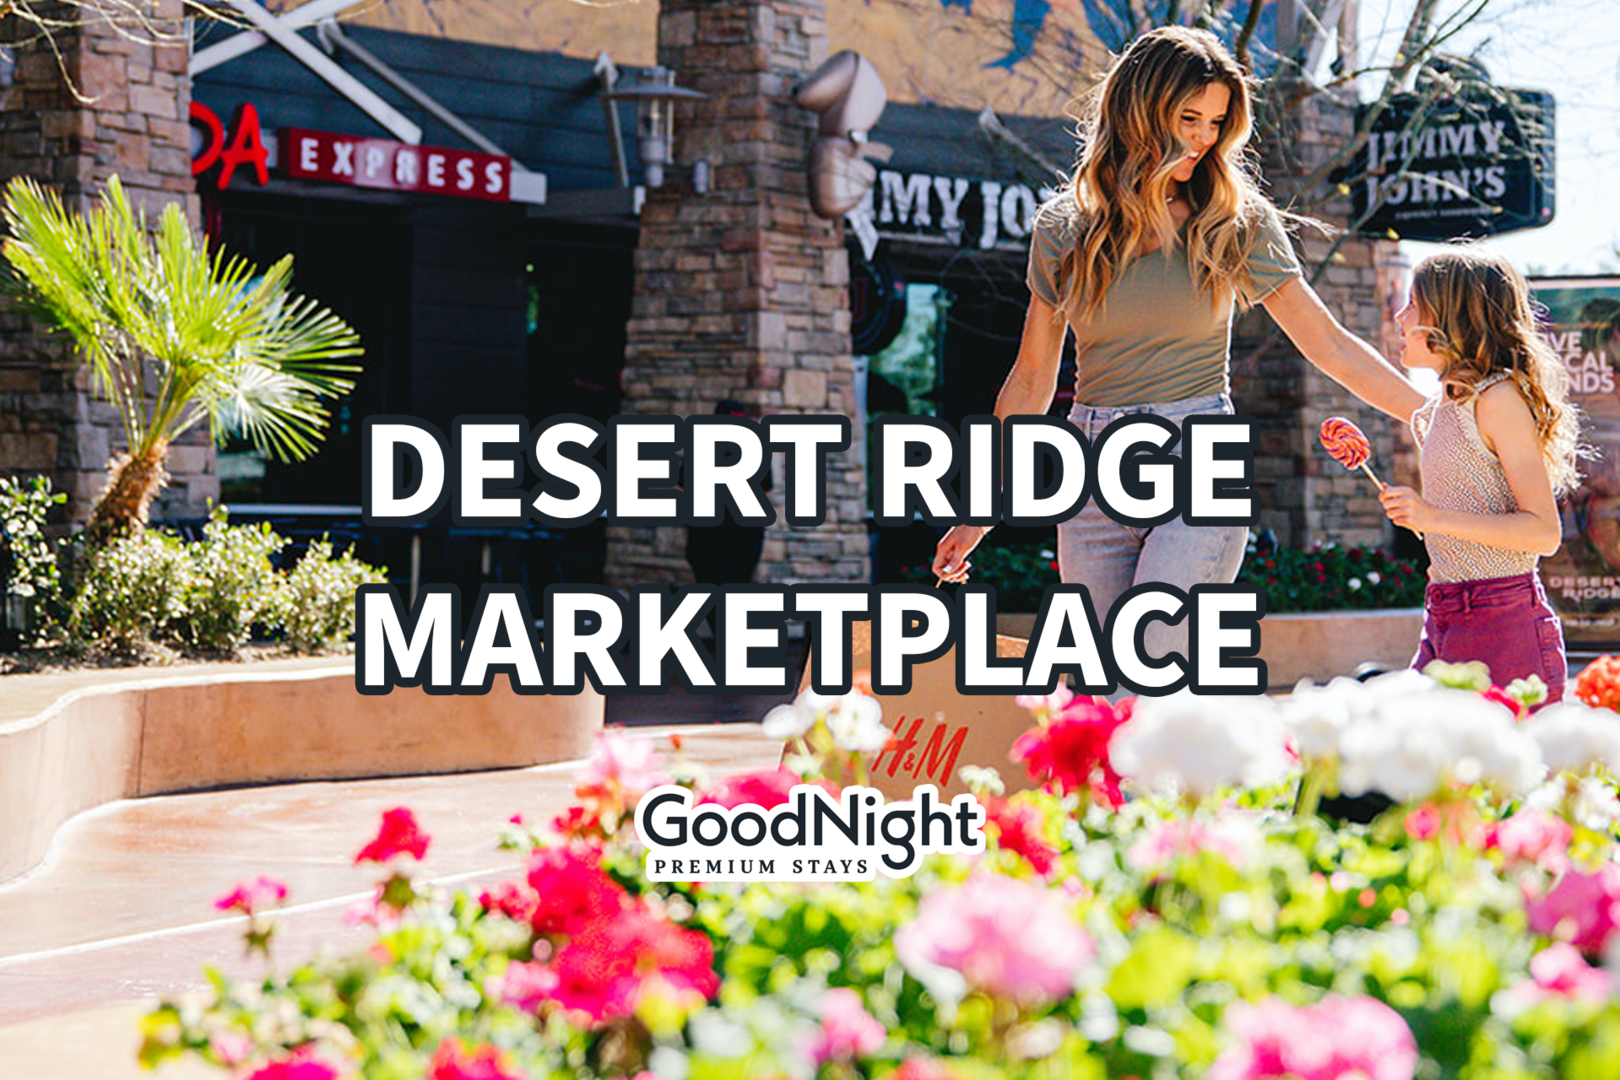 17 mins: Desert Ridge Marketplace